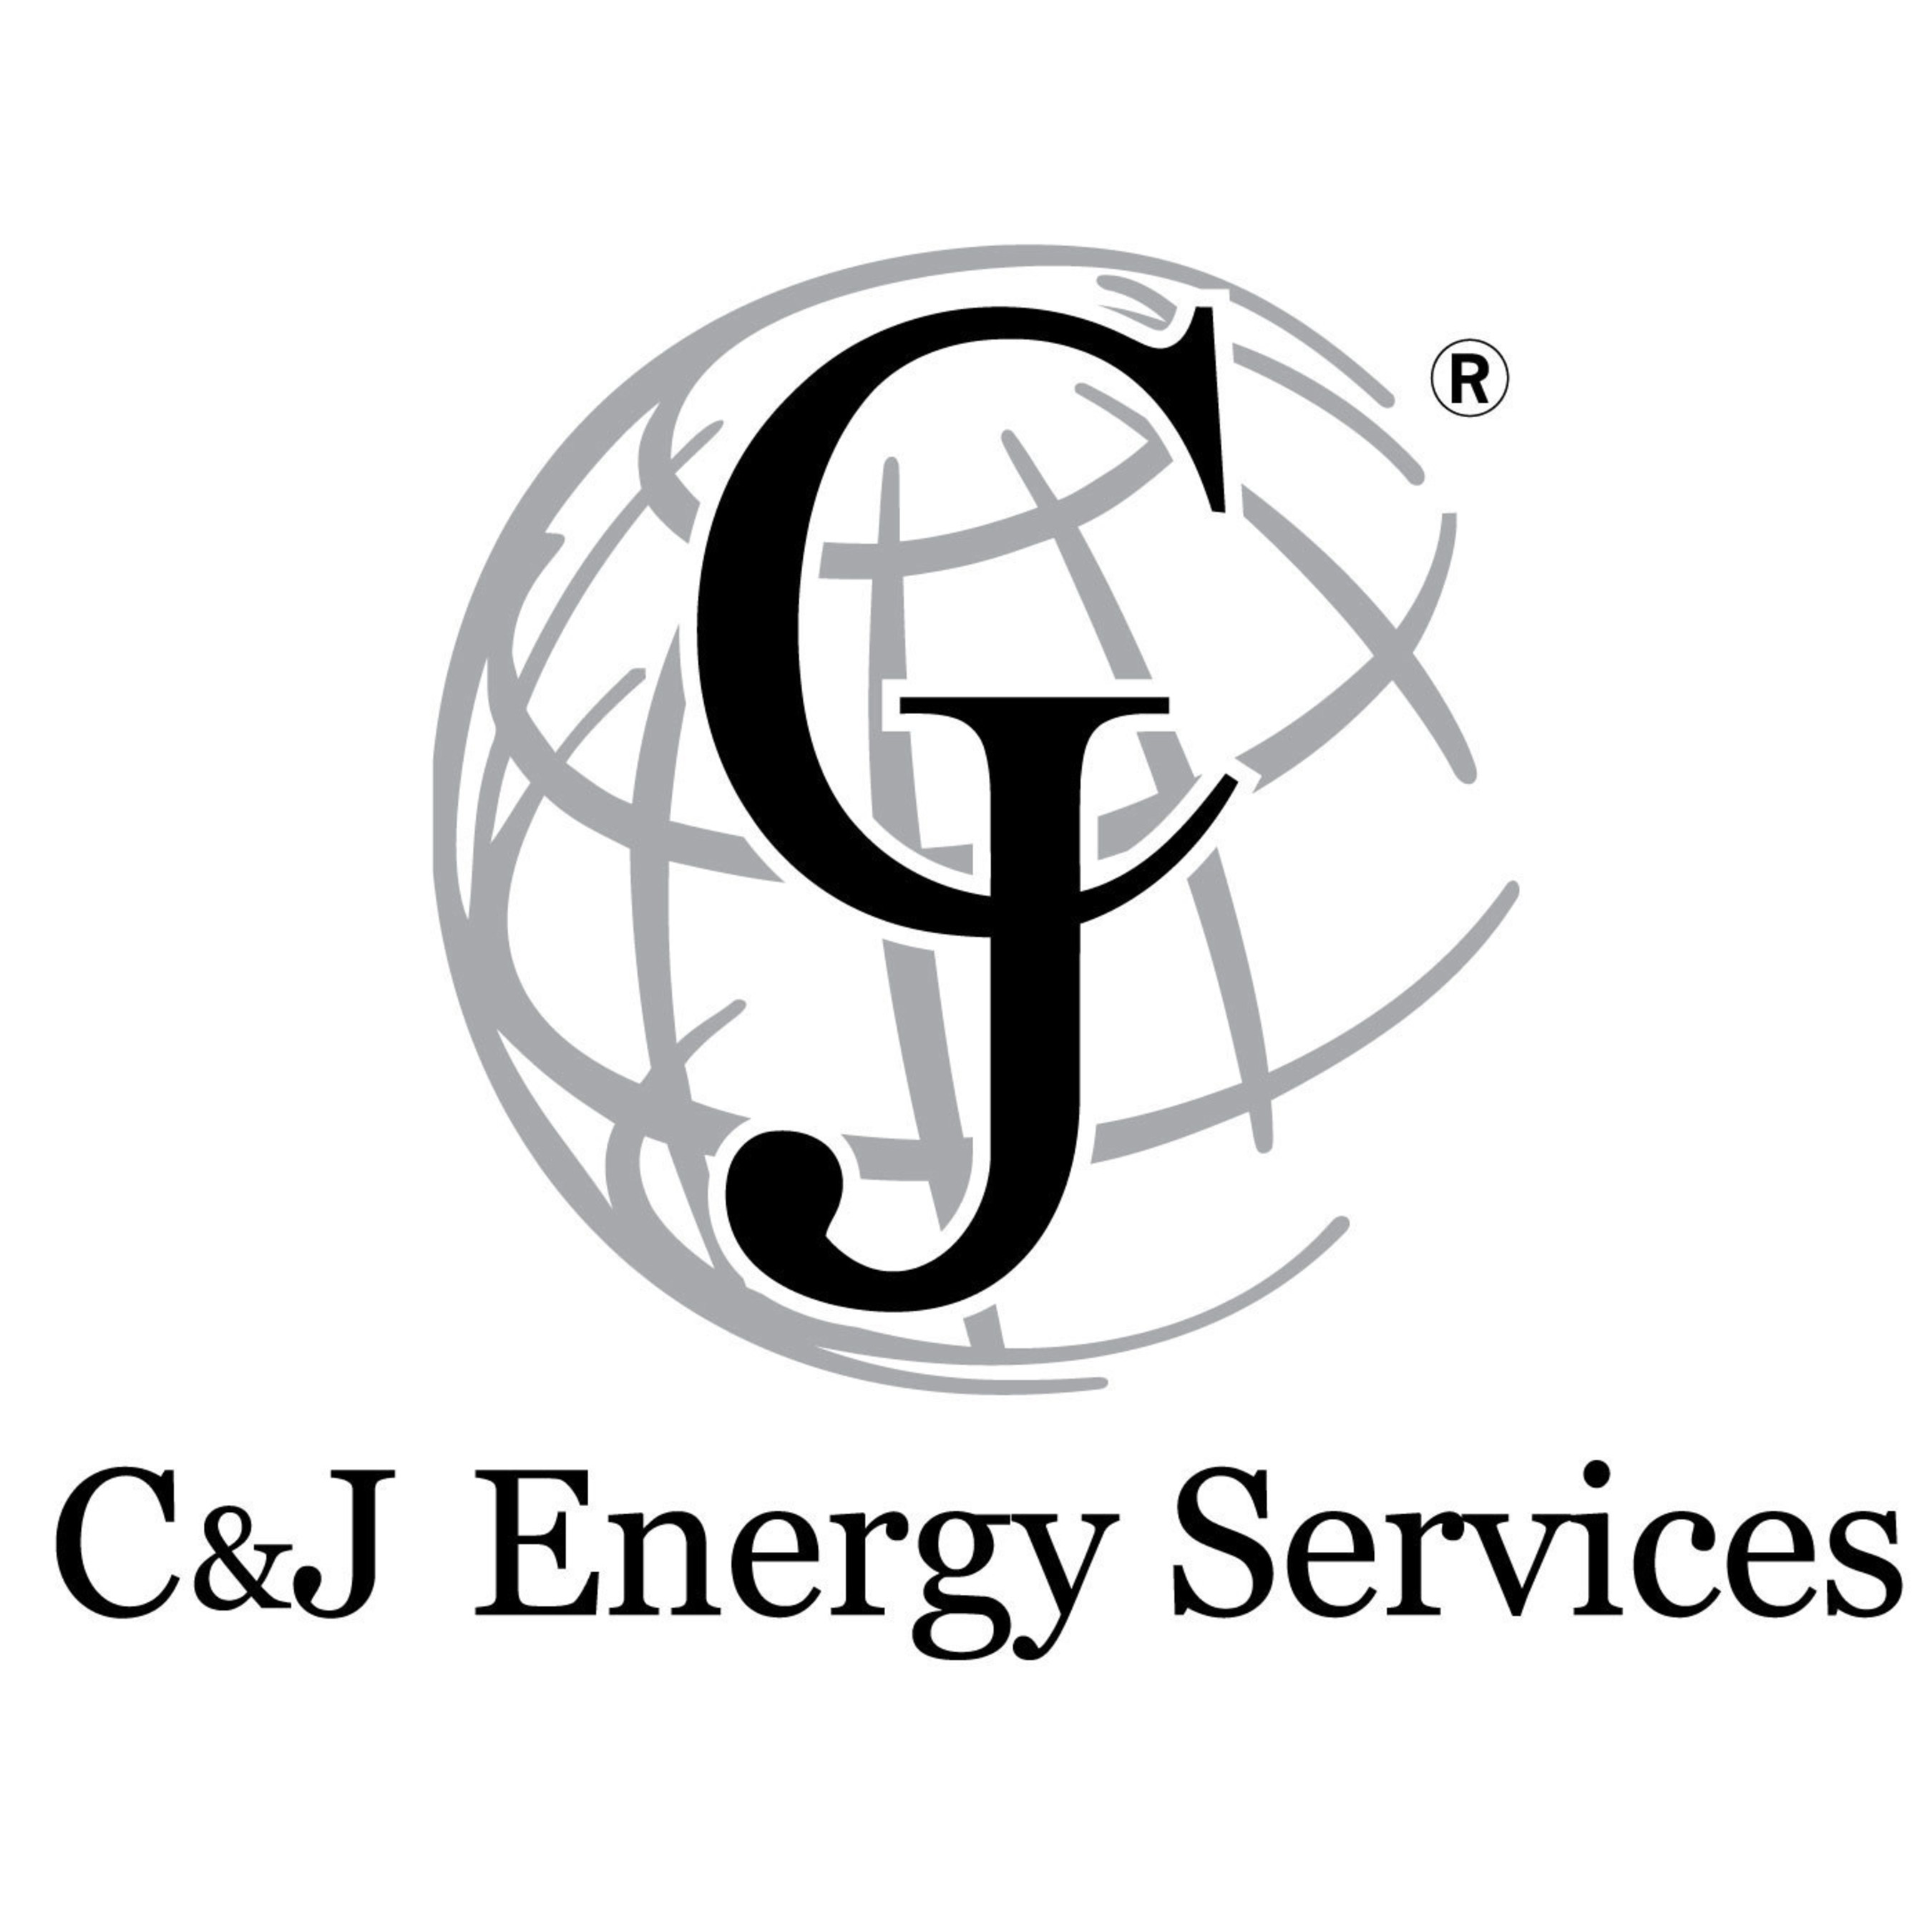 C&J Energy Services Logo.